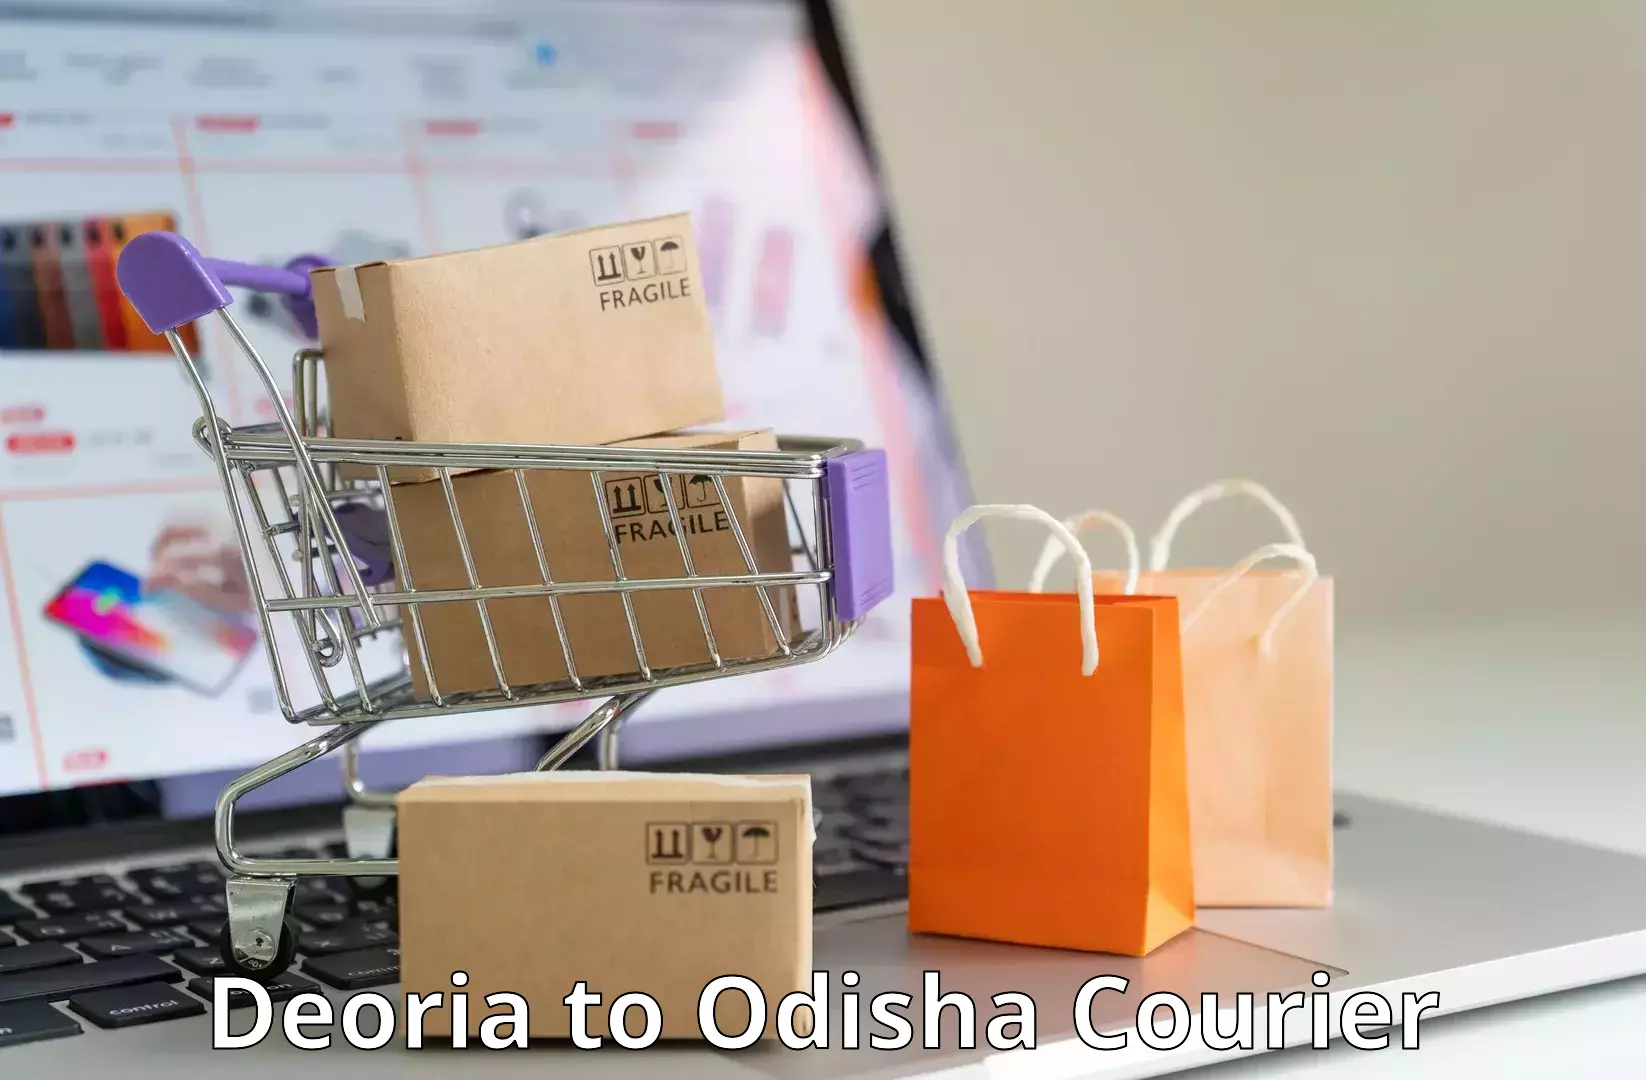 User-friendly courier app Deoria to Jaraka